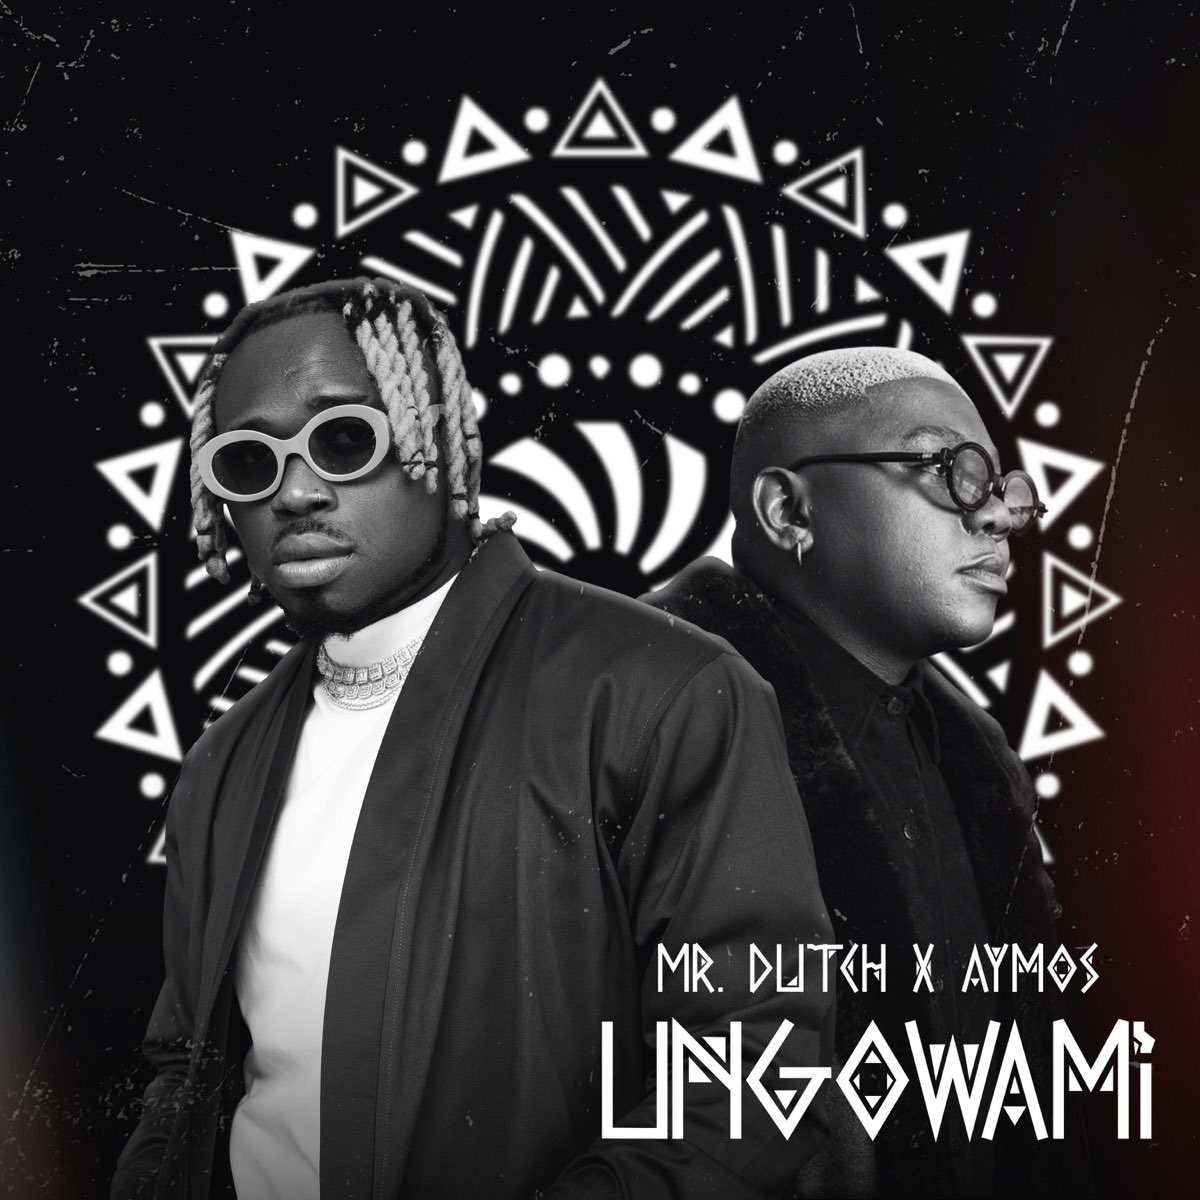 Mr Dutch ft. Aymos - Ungowami